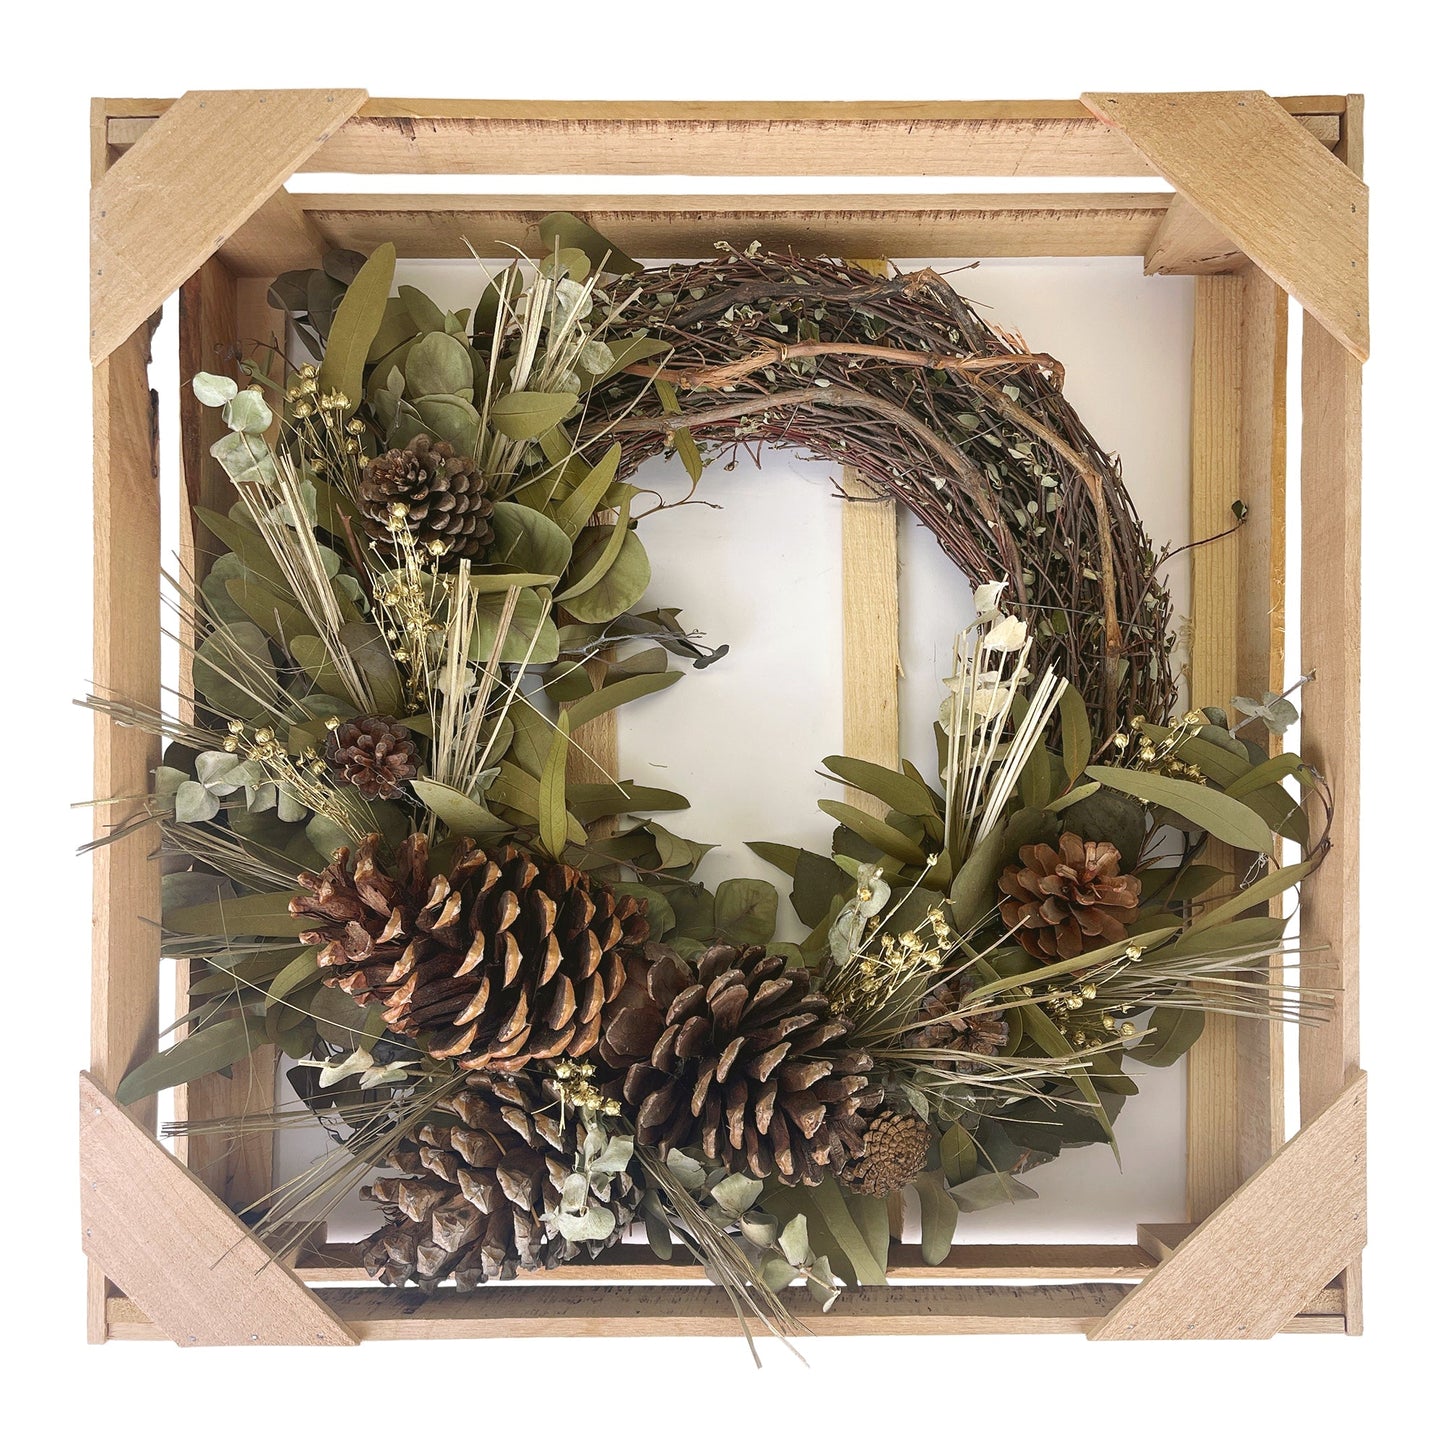 Woodland Pinecone Half Wreath in storage crate